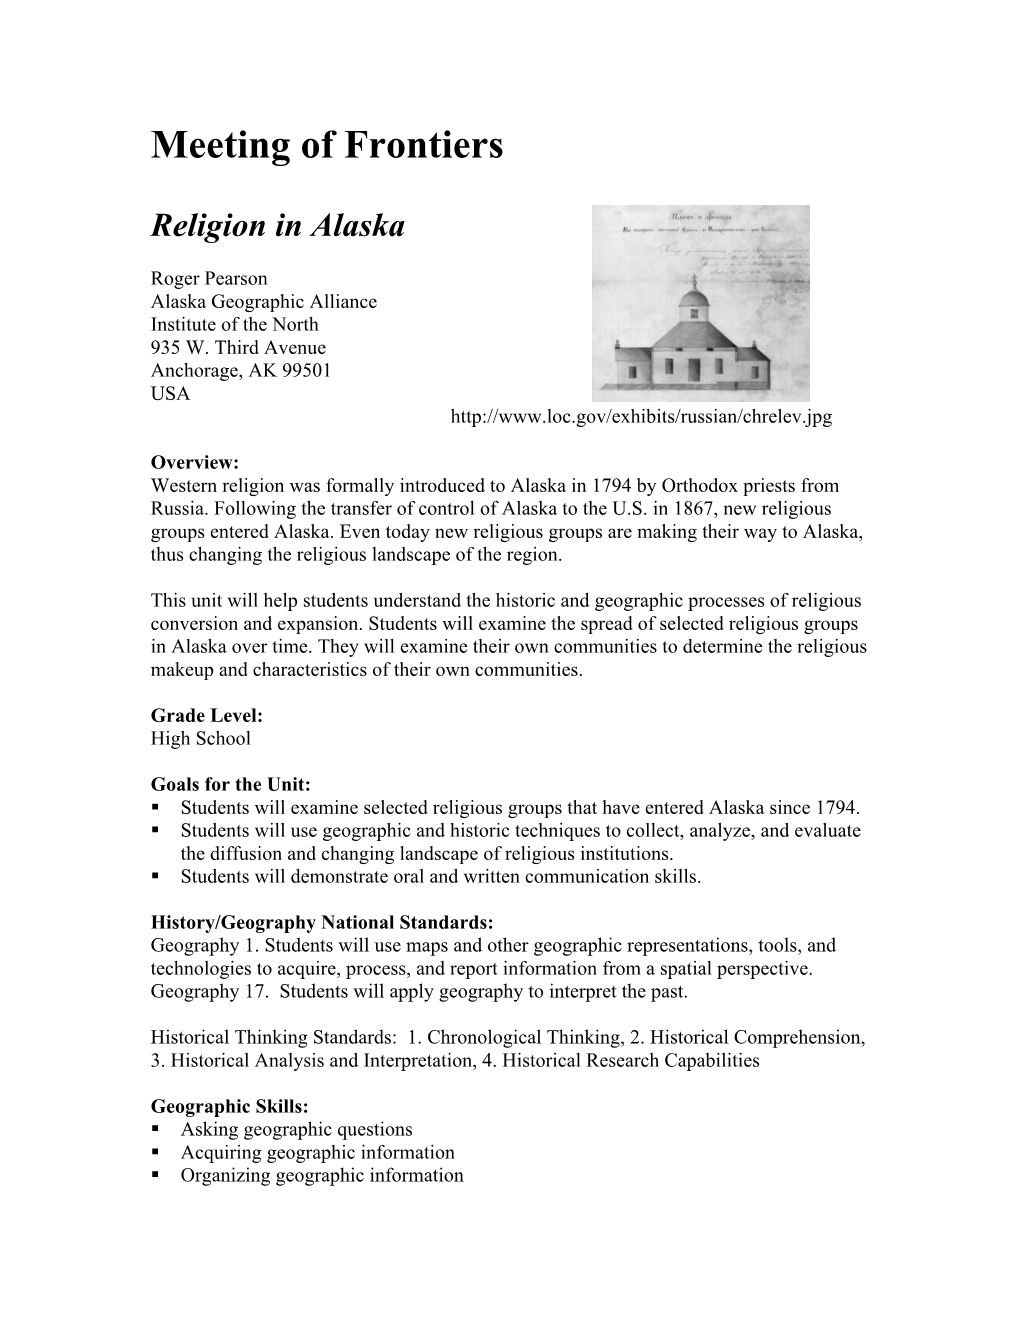 Religion in Alaska